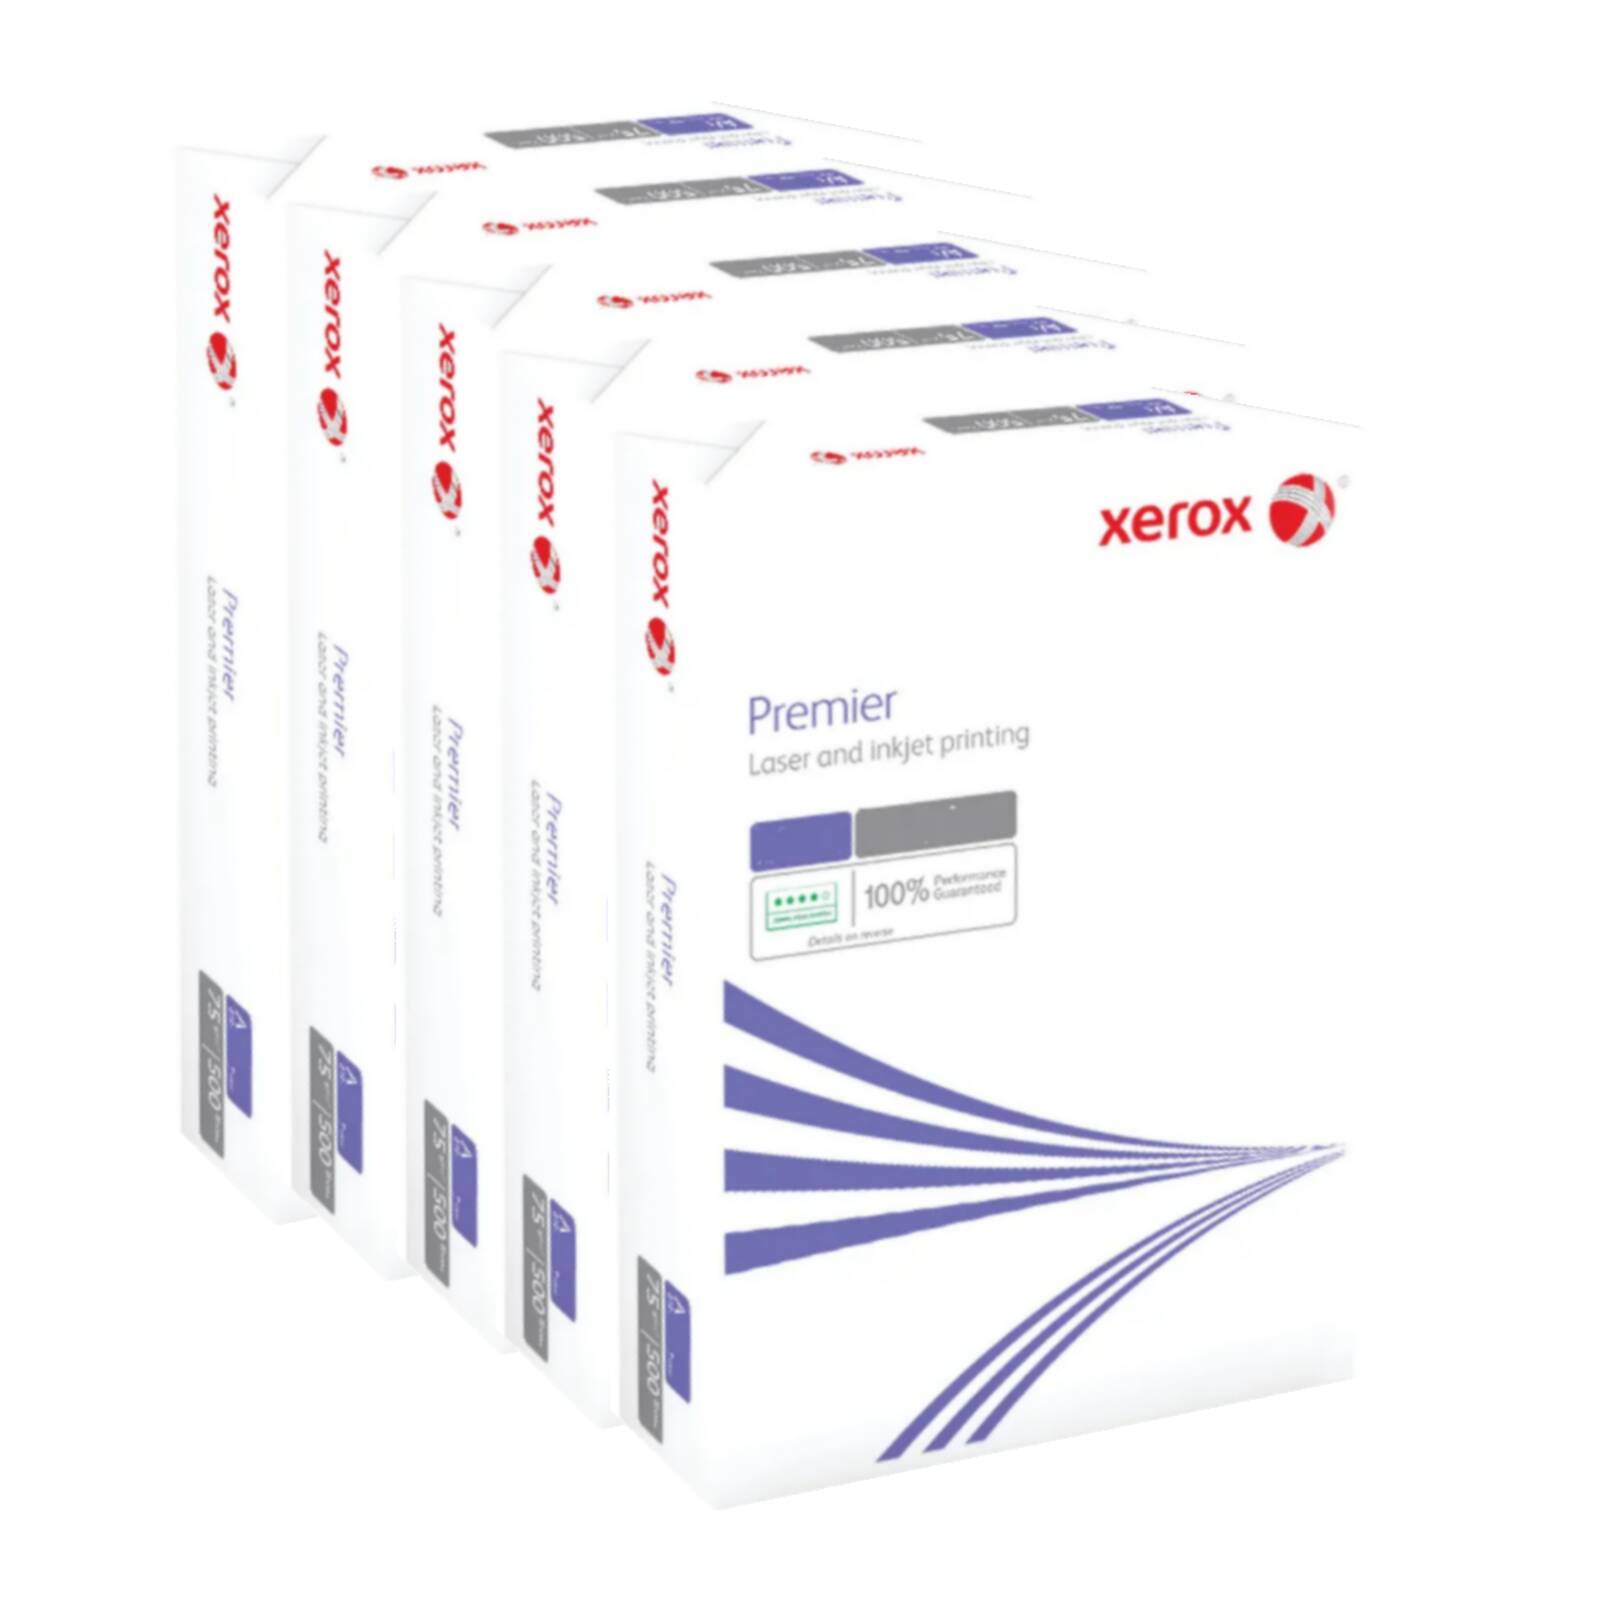 Xerox Premier A4 100gsm Printer Paper 2500 Sheets (5 Reams)